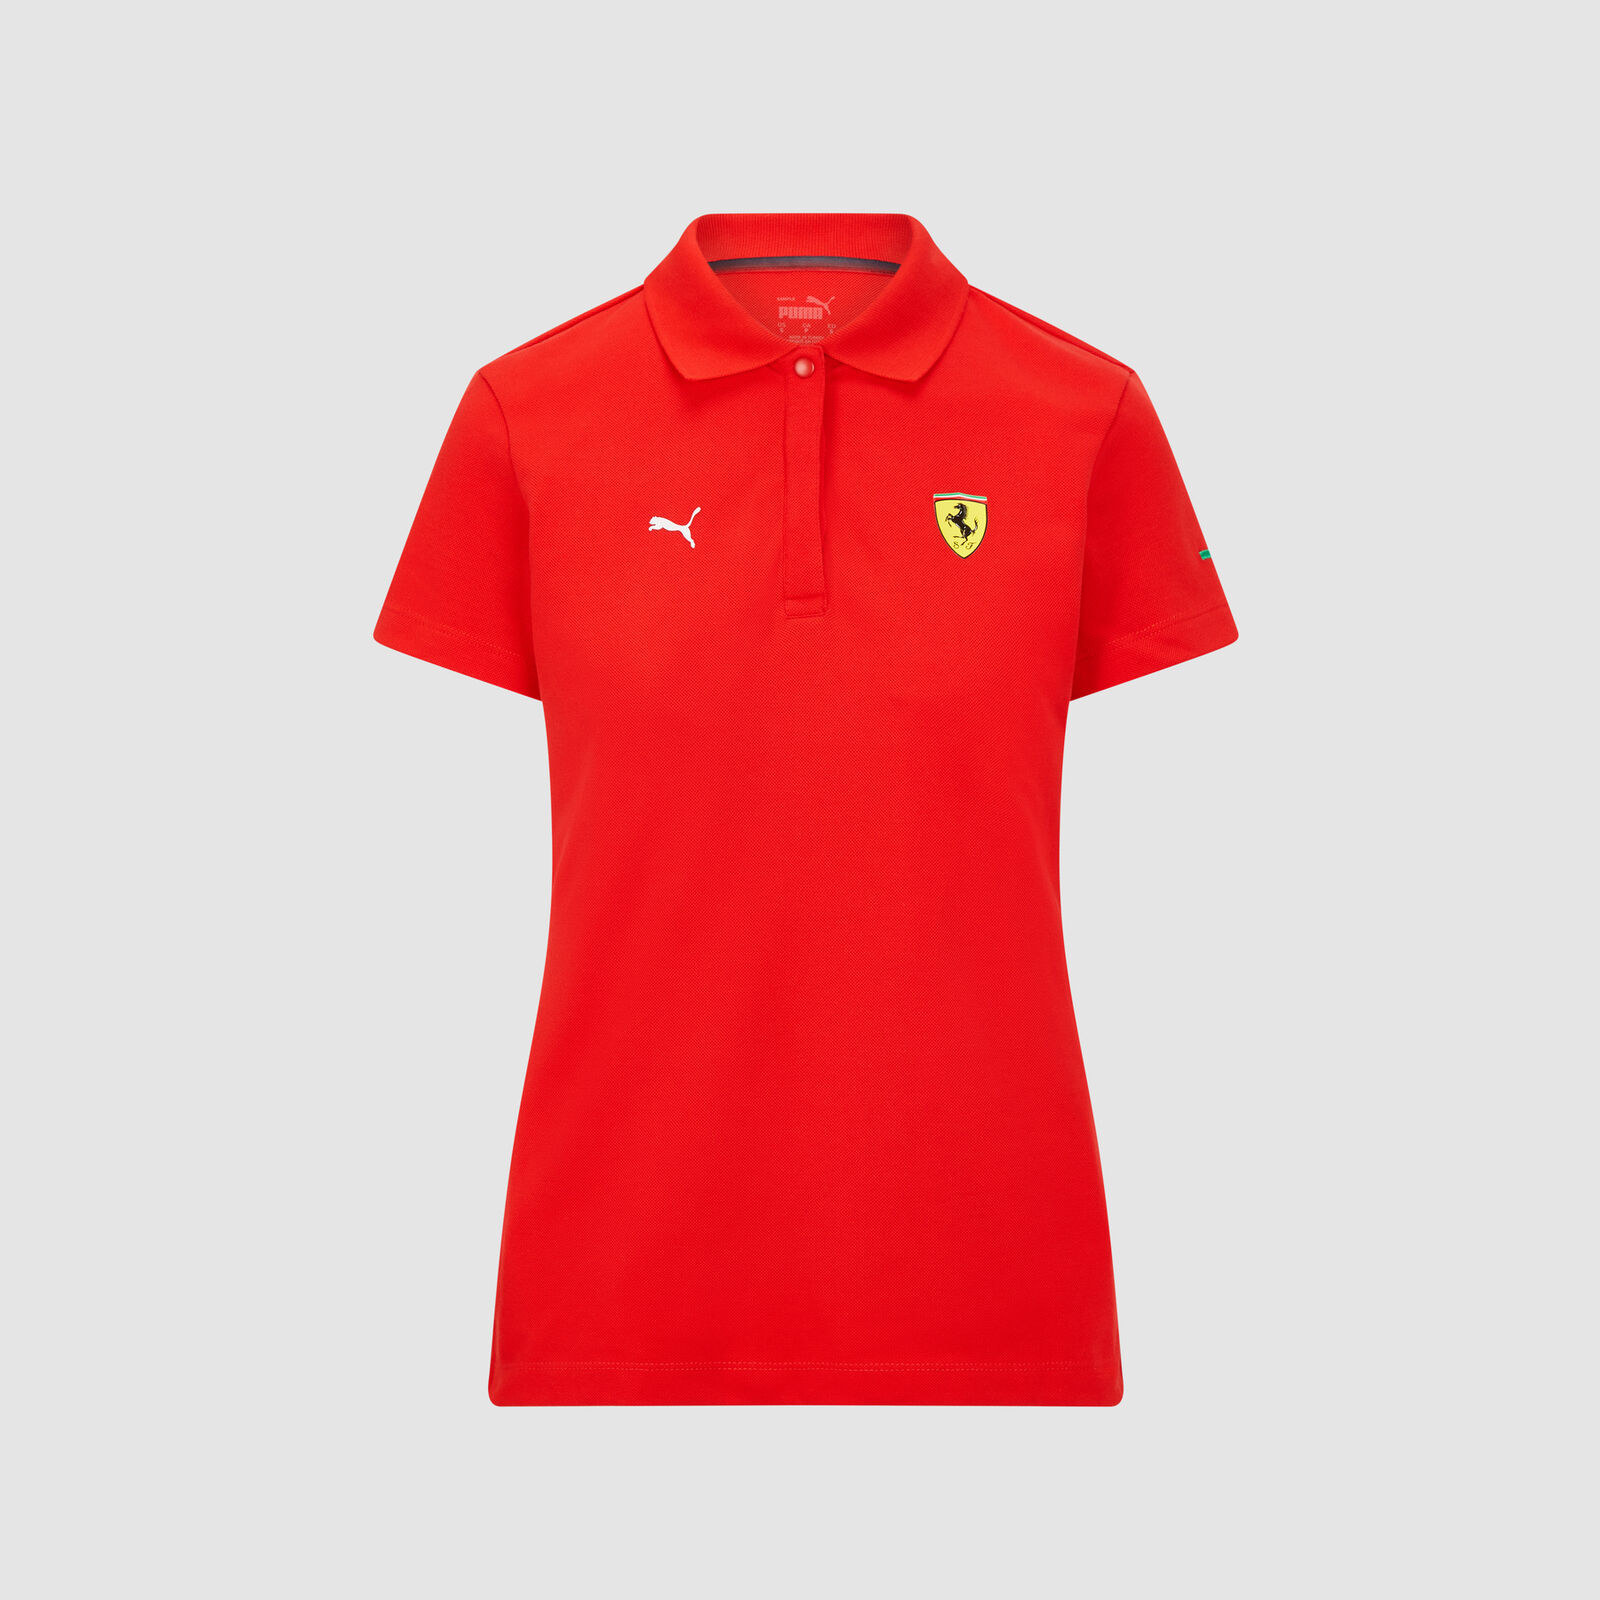 Ferrari - Fórmula 1 - Fernando Alonso - camisa polo - Catawiki